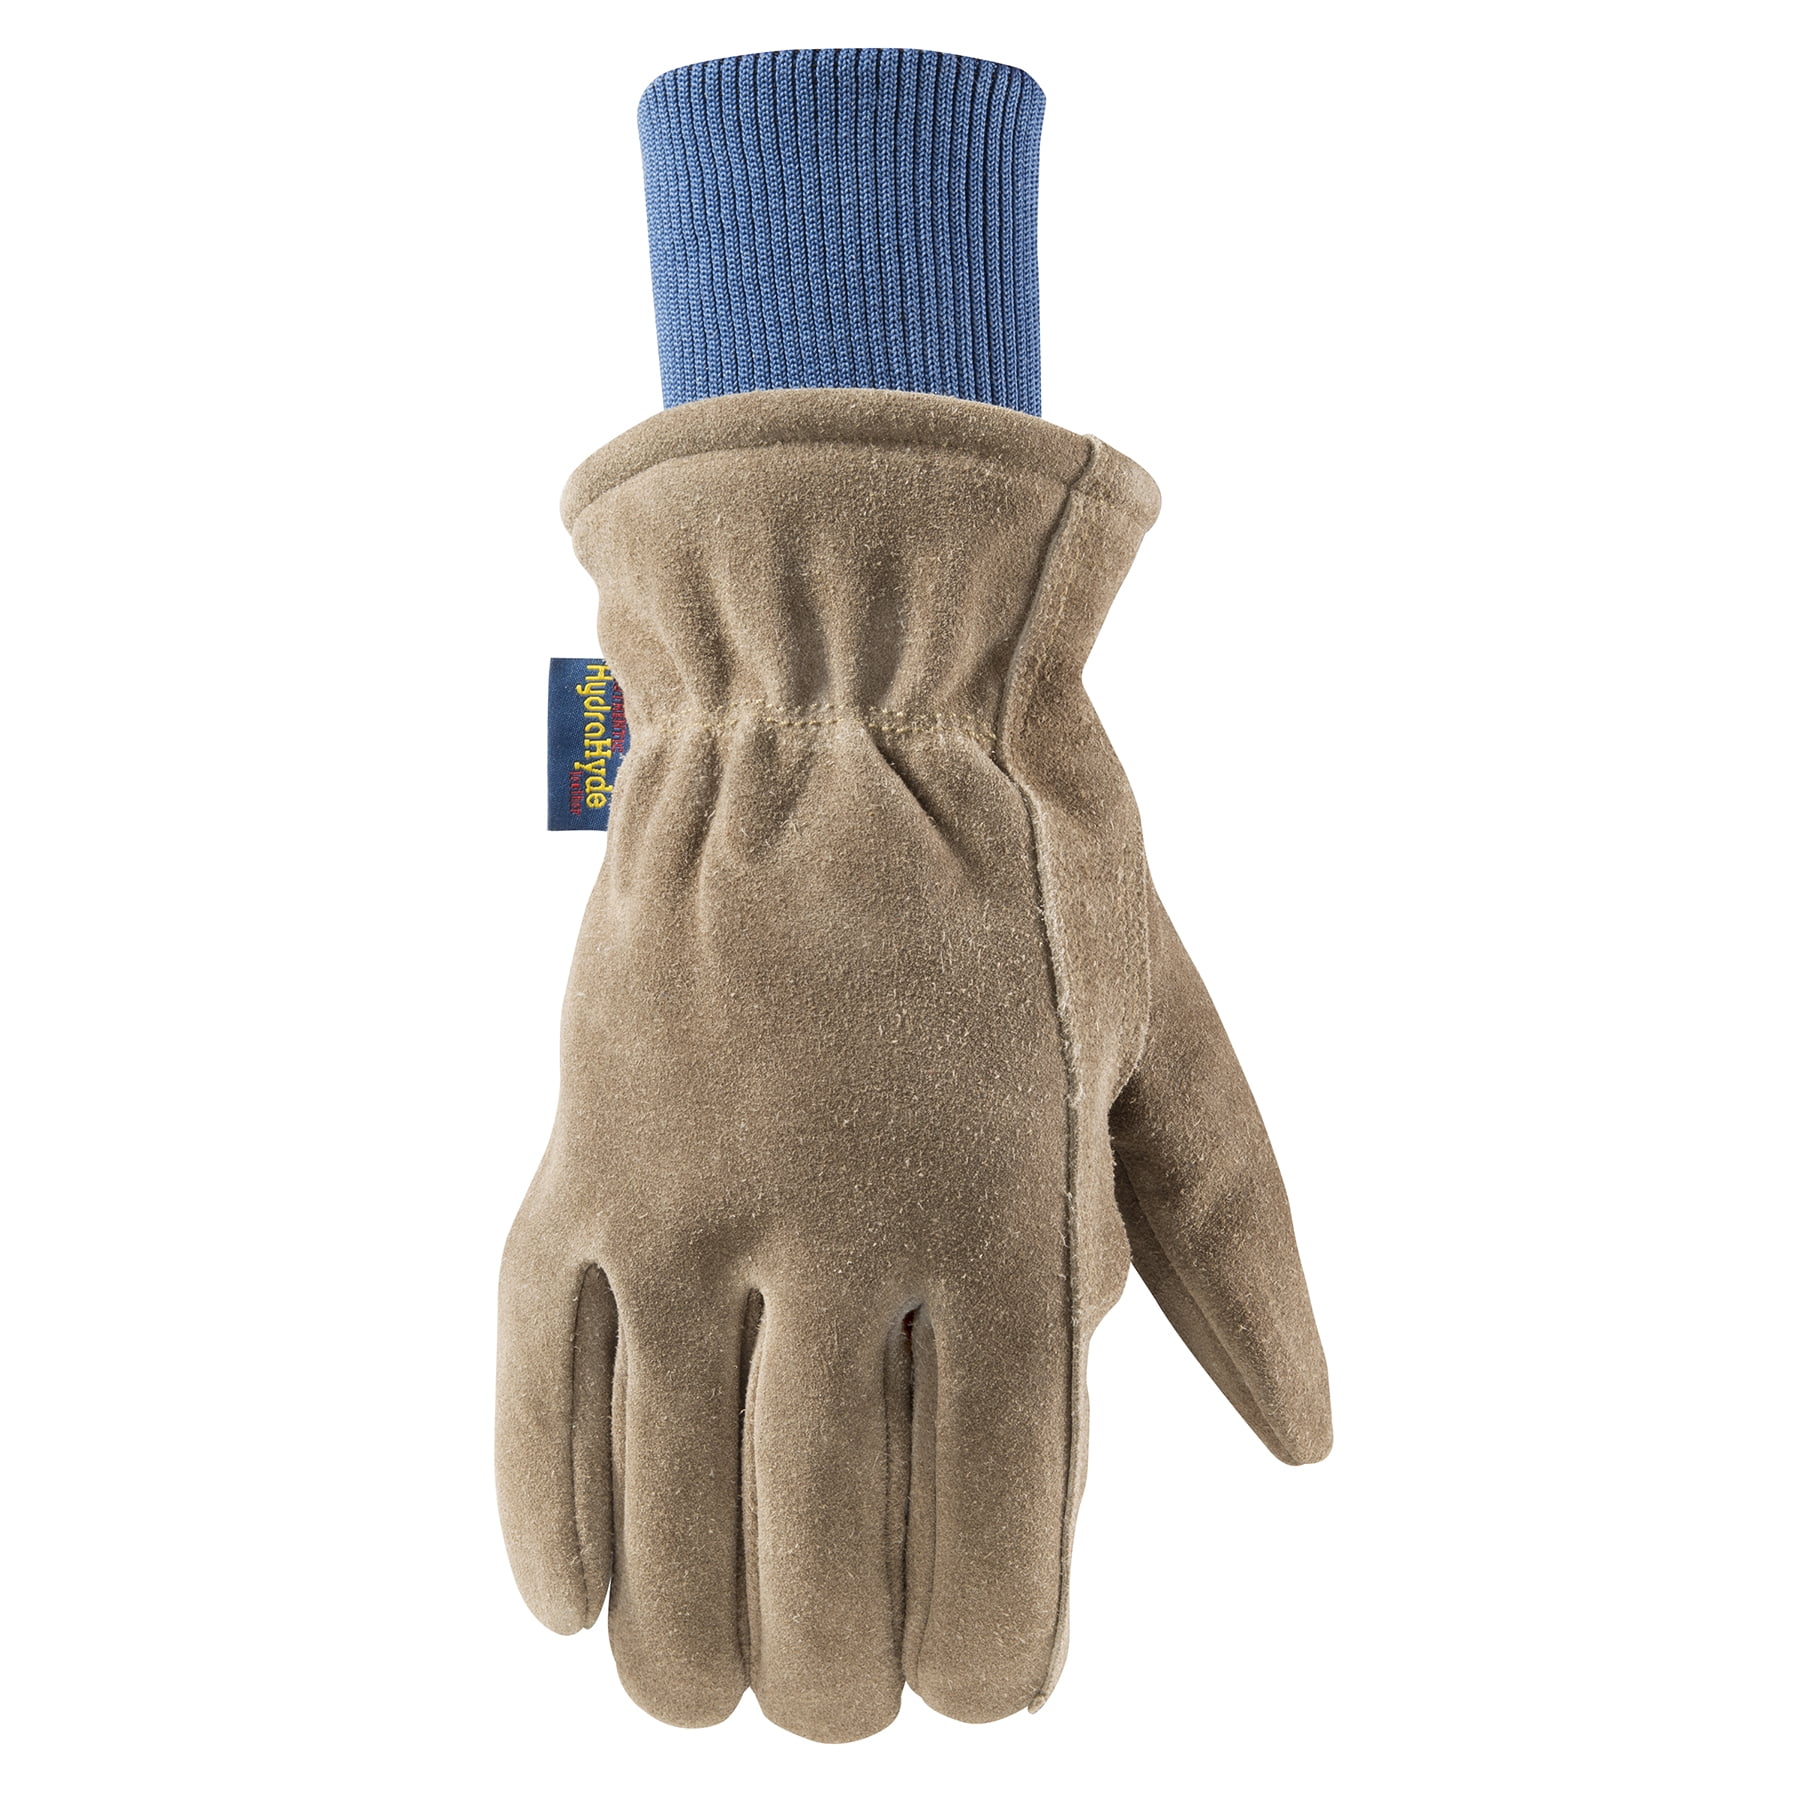 Mens HydraHyde Winter Work Gloves Waterproof Insert X-Large Wells Lamont Gloves 40-gram Thinsulate Wells Lamont 7739XL